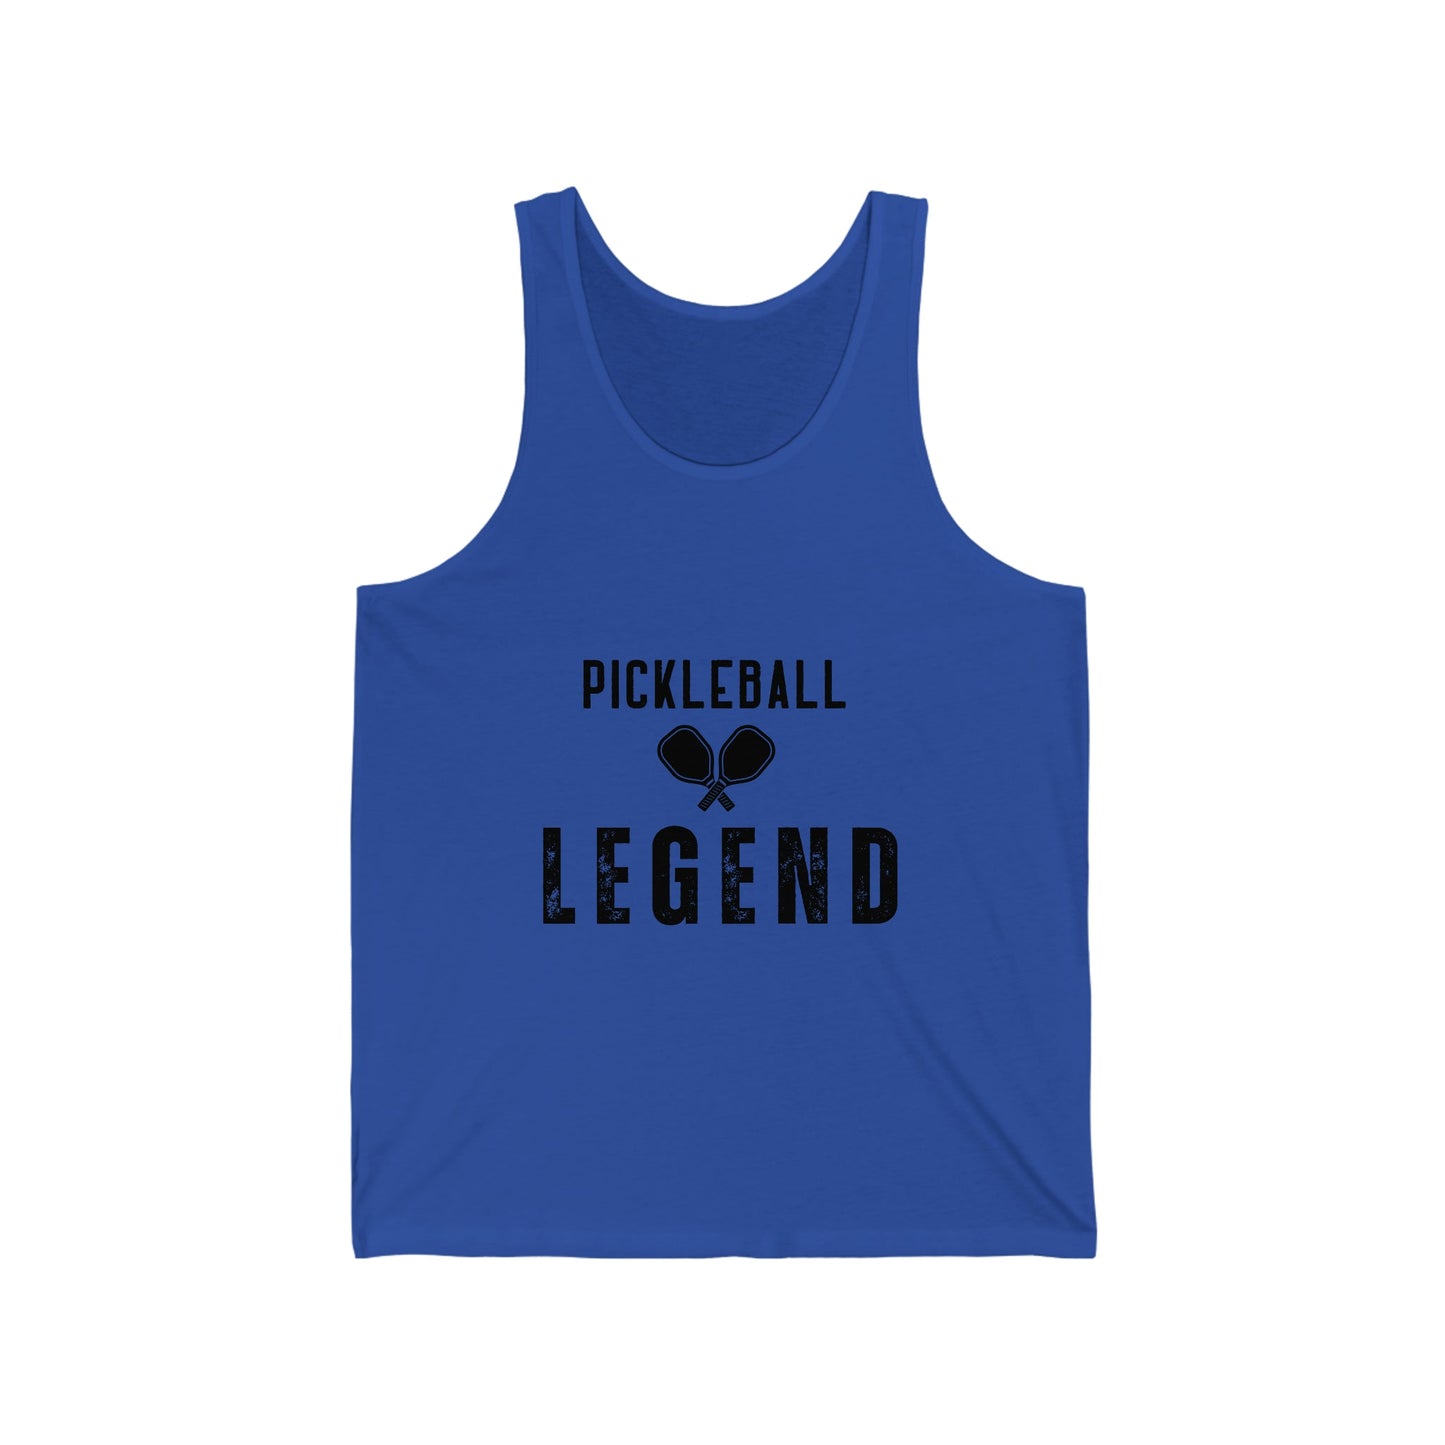 'Pickleball Legend' Tank Top